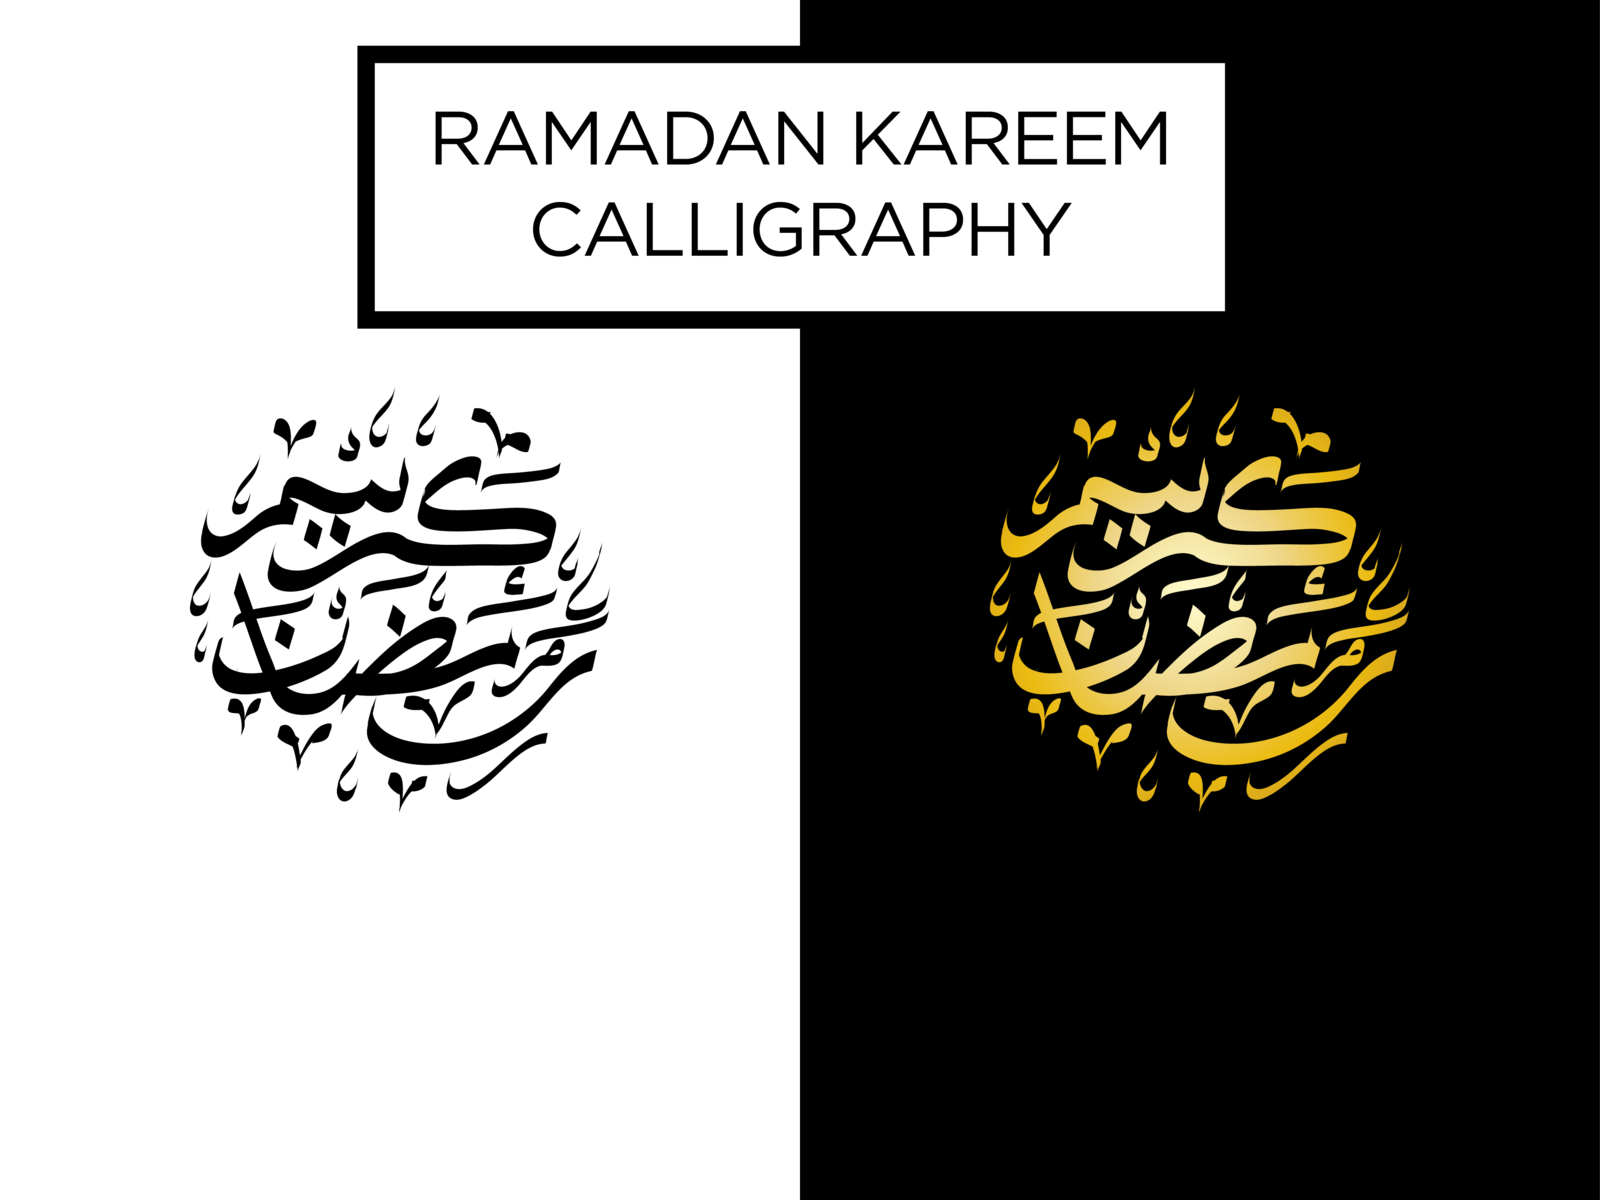 Ramadan Kareem Calligraphy by Muhammad Ridwan on Dribbble